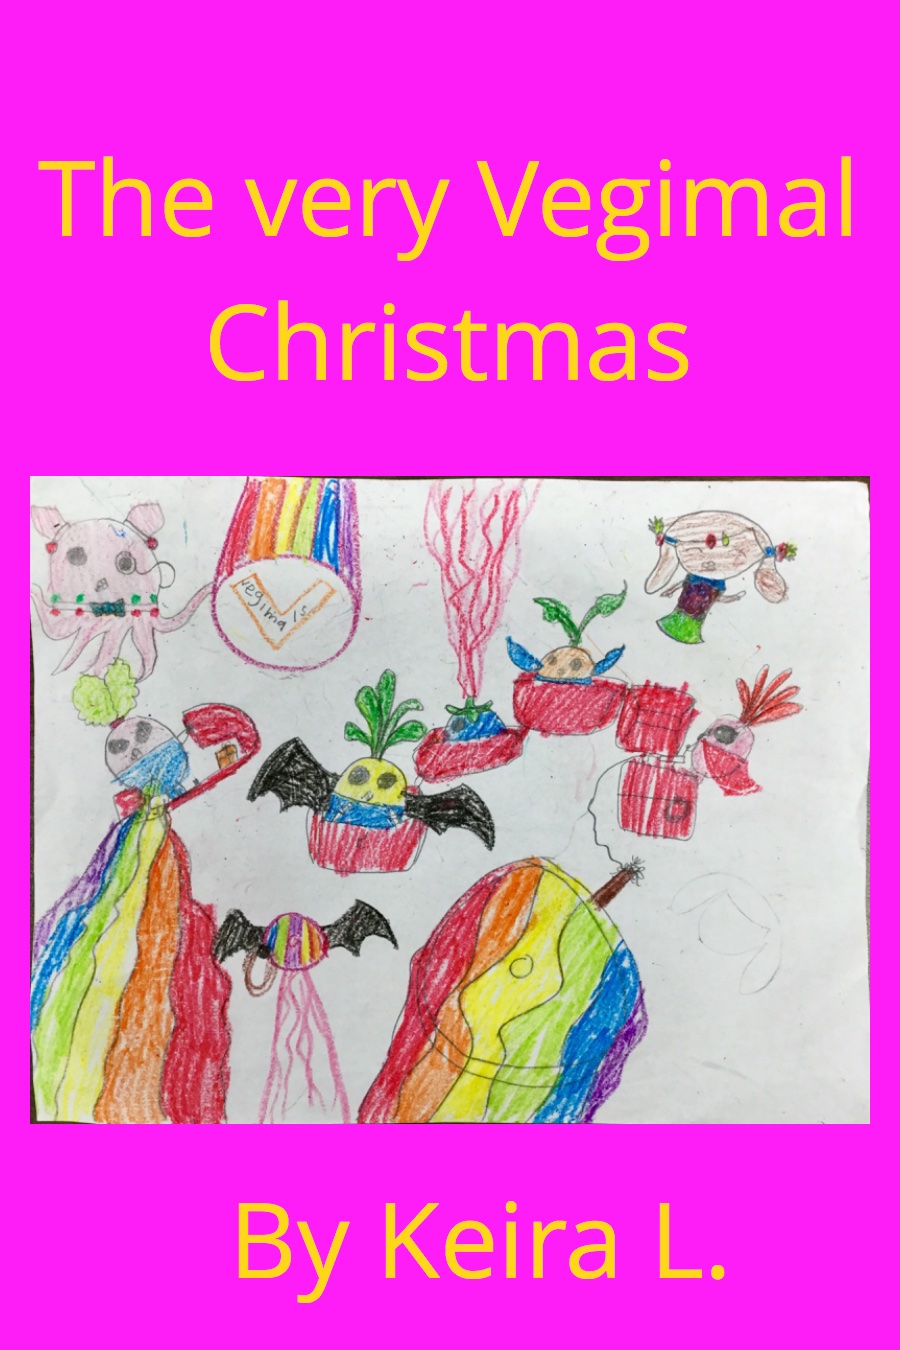 The Very Vegimal Christmas by Keira L